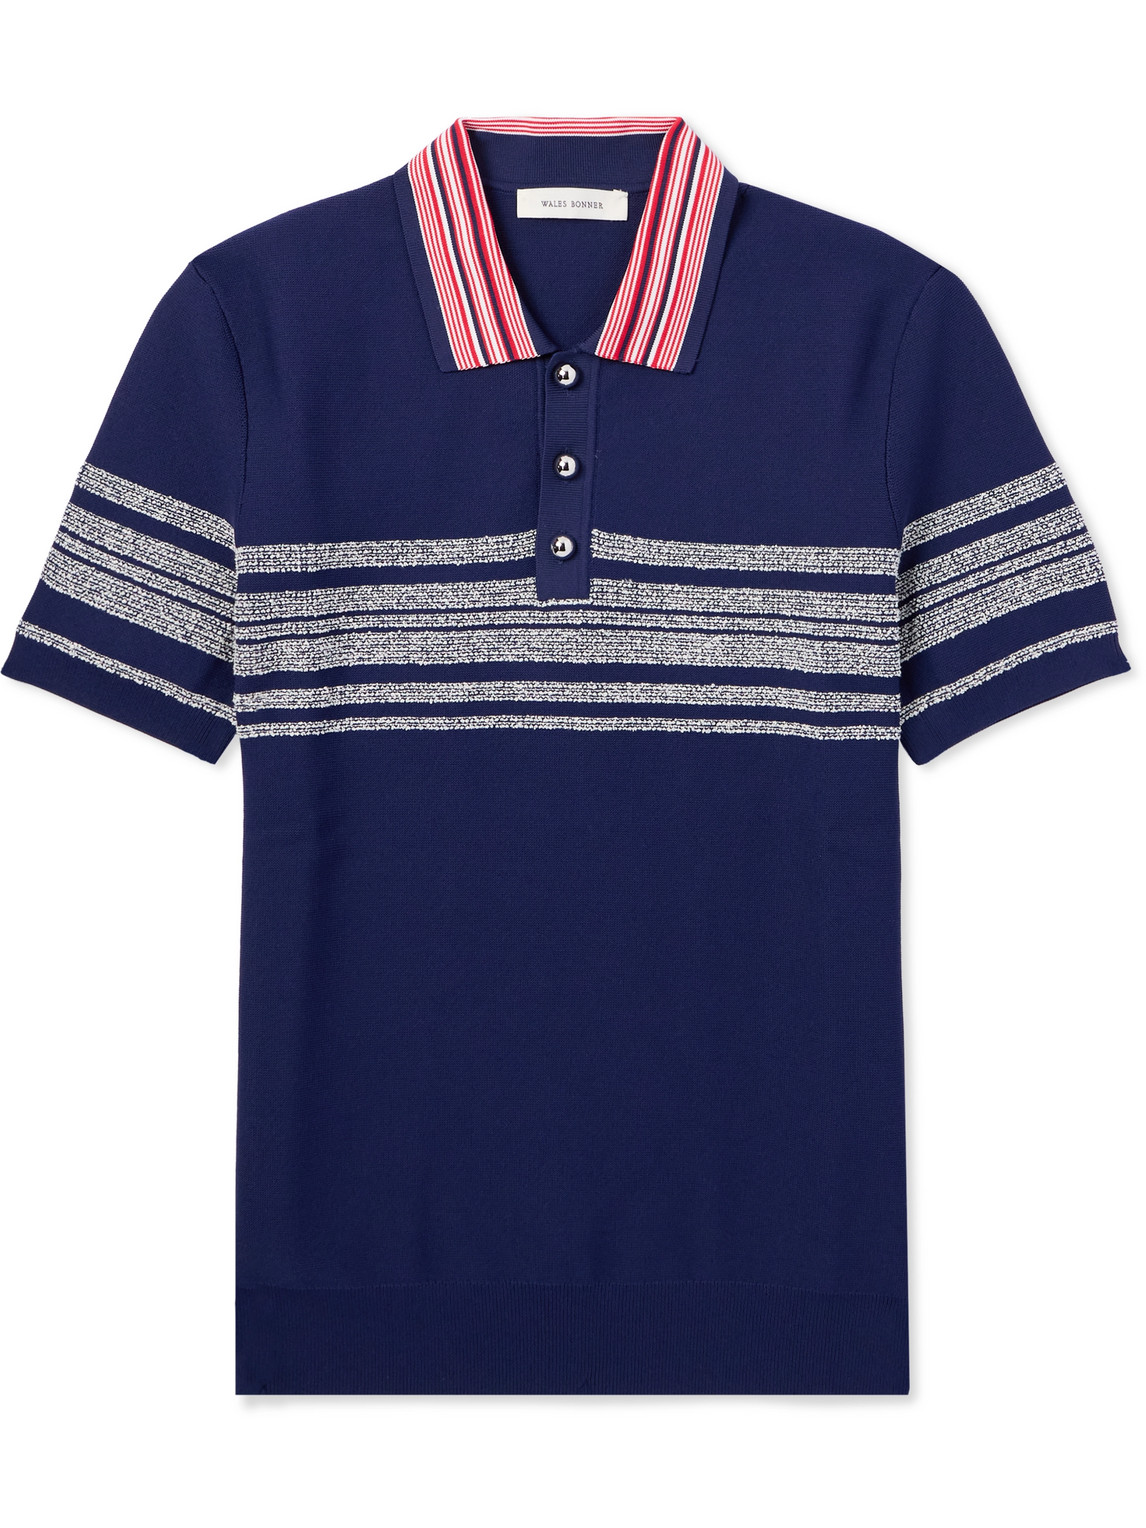 Wales Bonner - Dawn Slim-Fit Striped Knitted Polo Shirt - Men - Blue - XXL von Wales Bonner